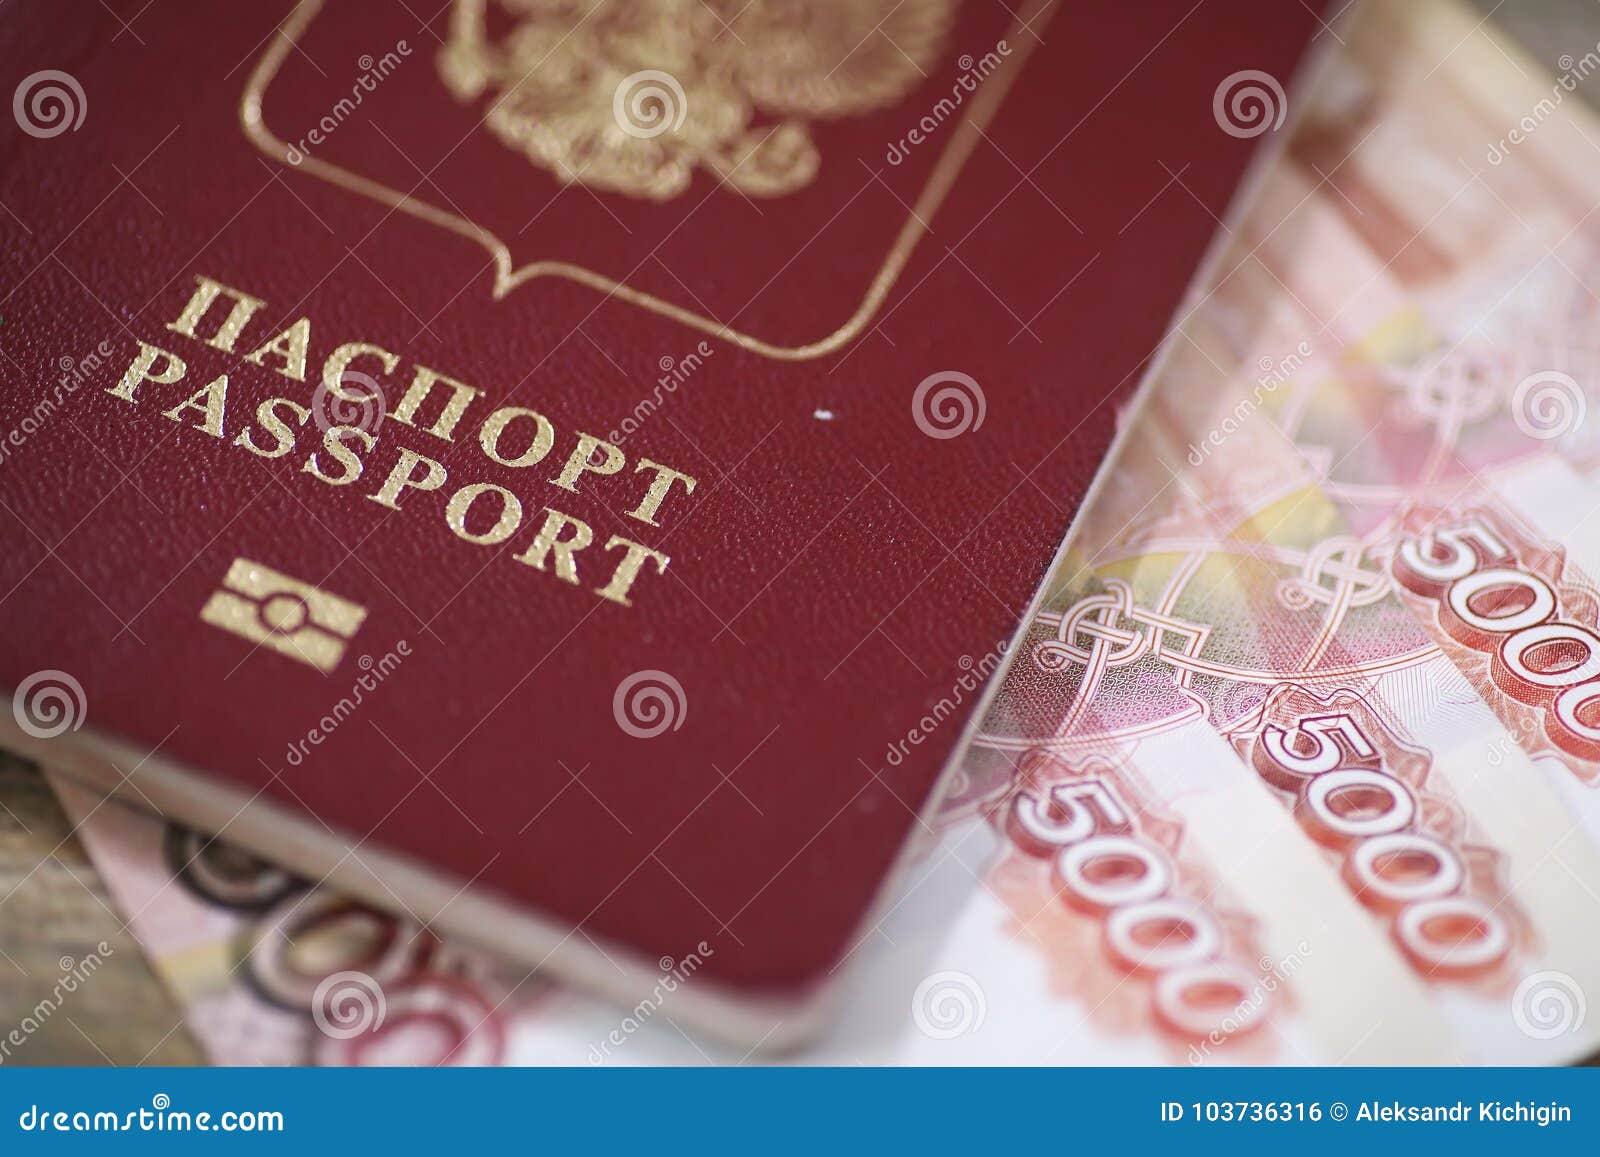 Займ по паспорту в Самаре срочно